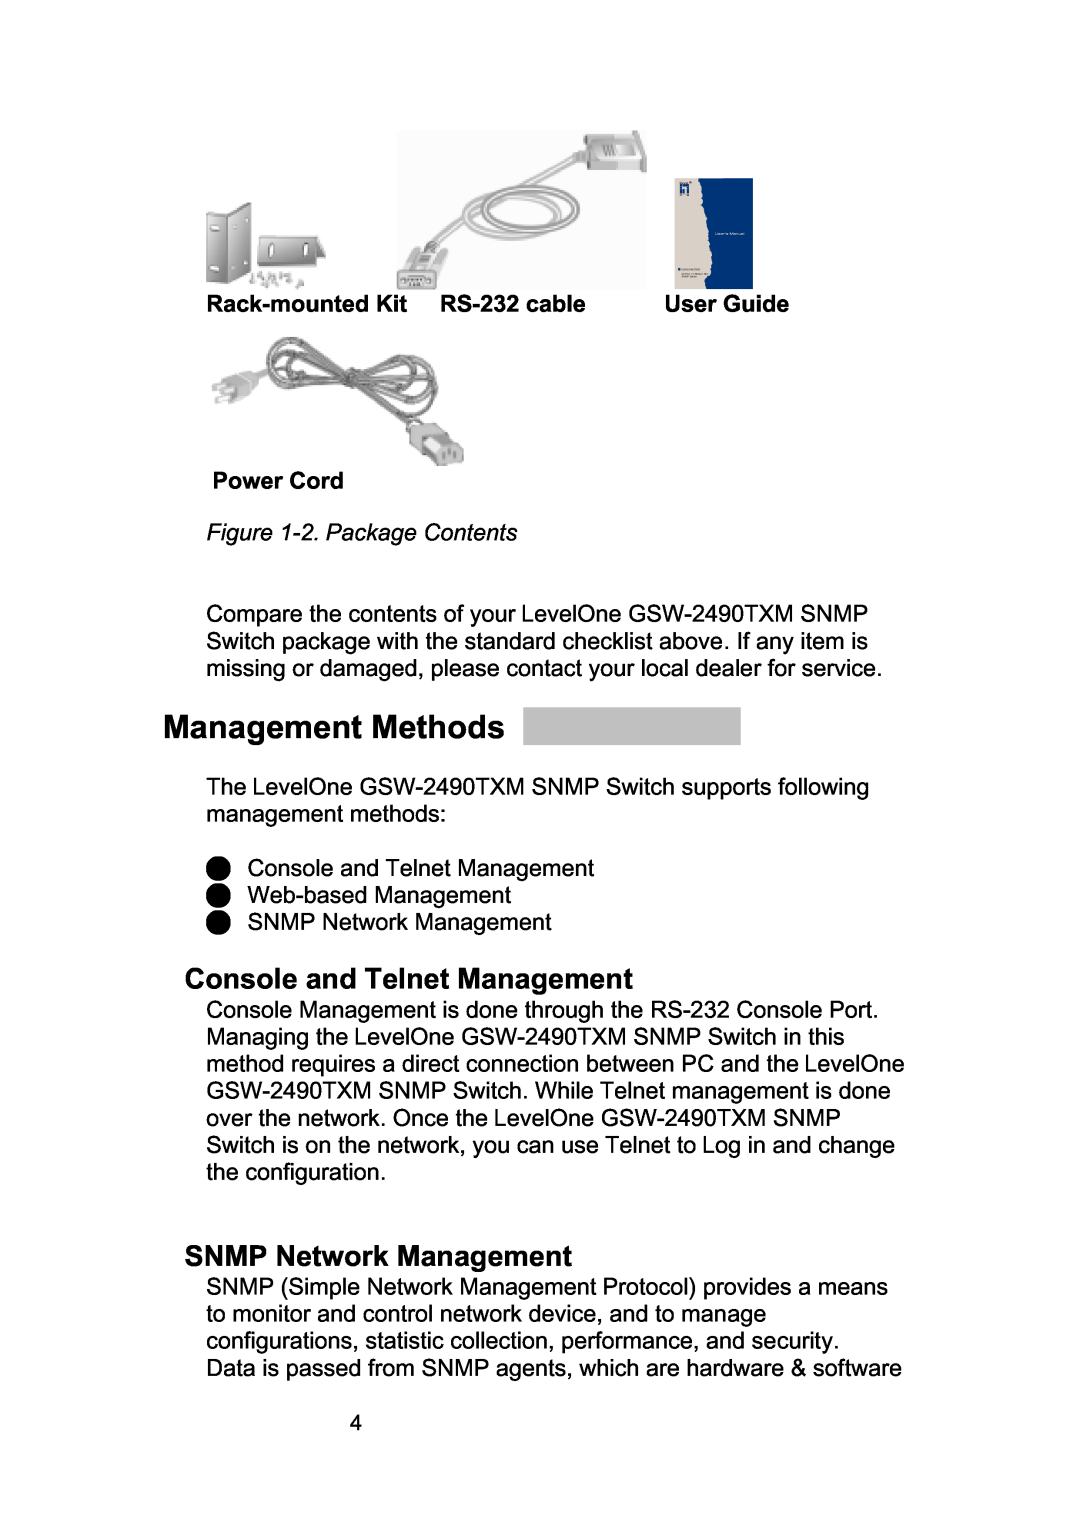 LevelOne GSW-2490TXM manual Management Methods, Console and Telnet Management, SNMP Network Management, User Guide 